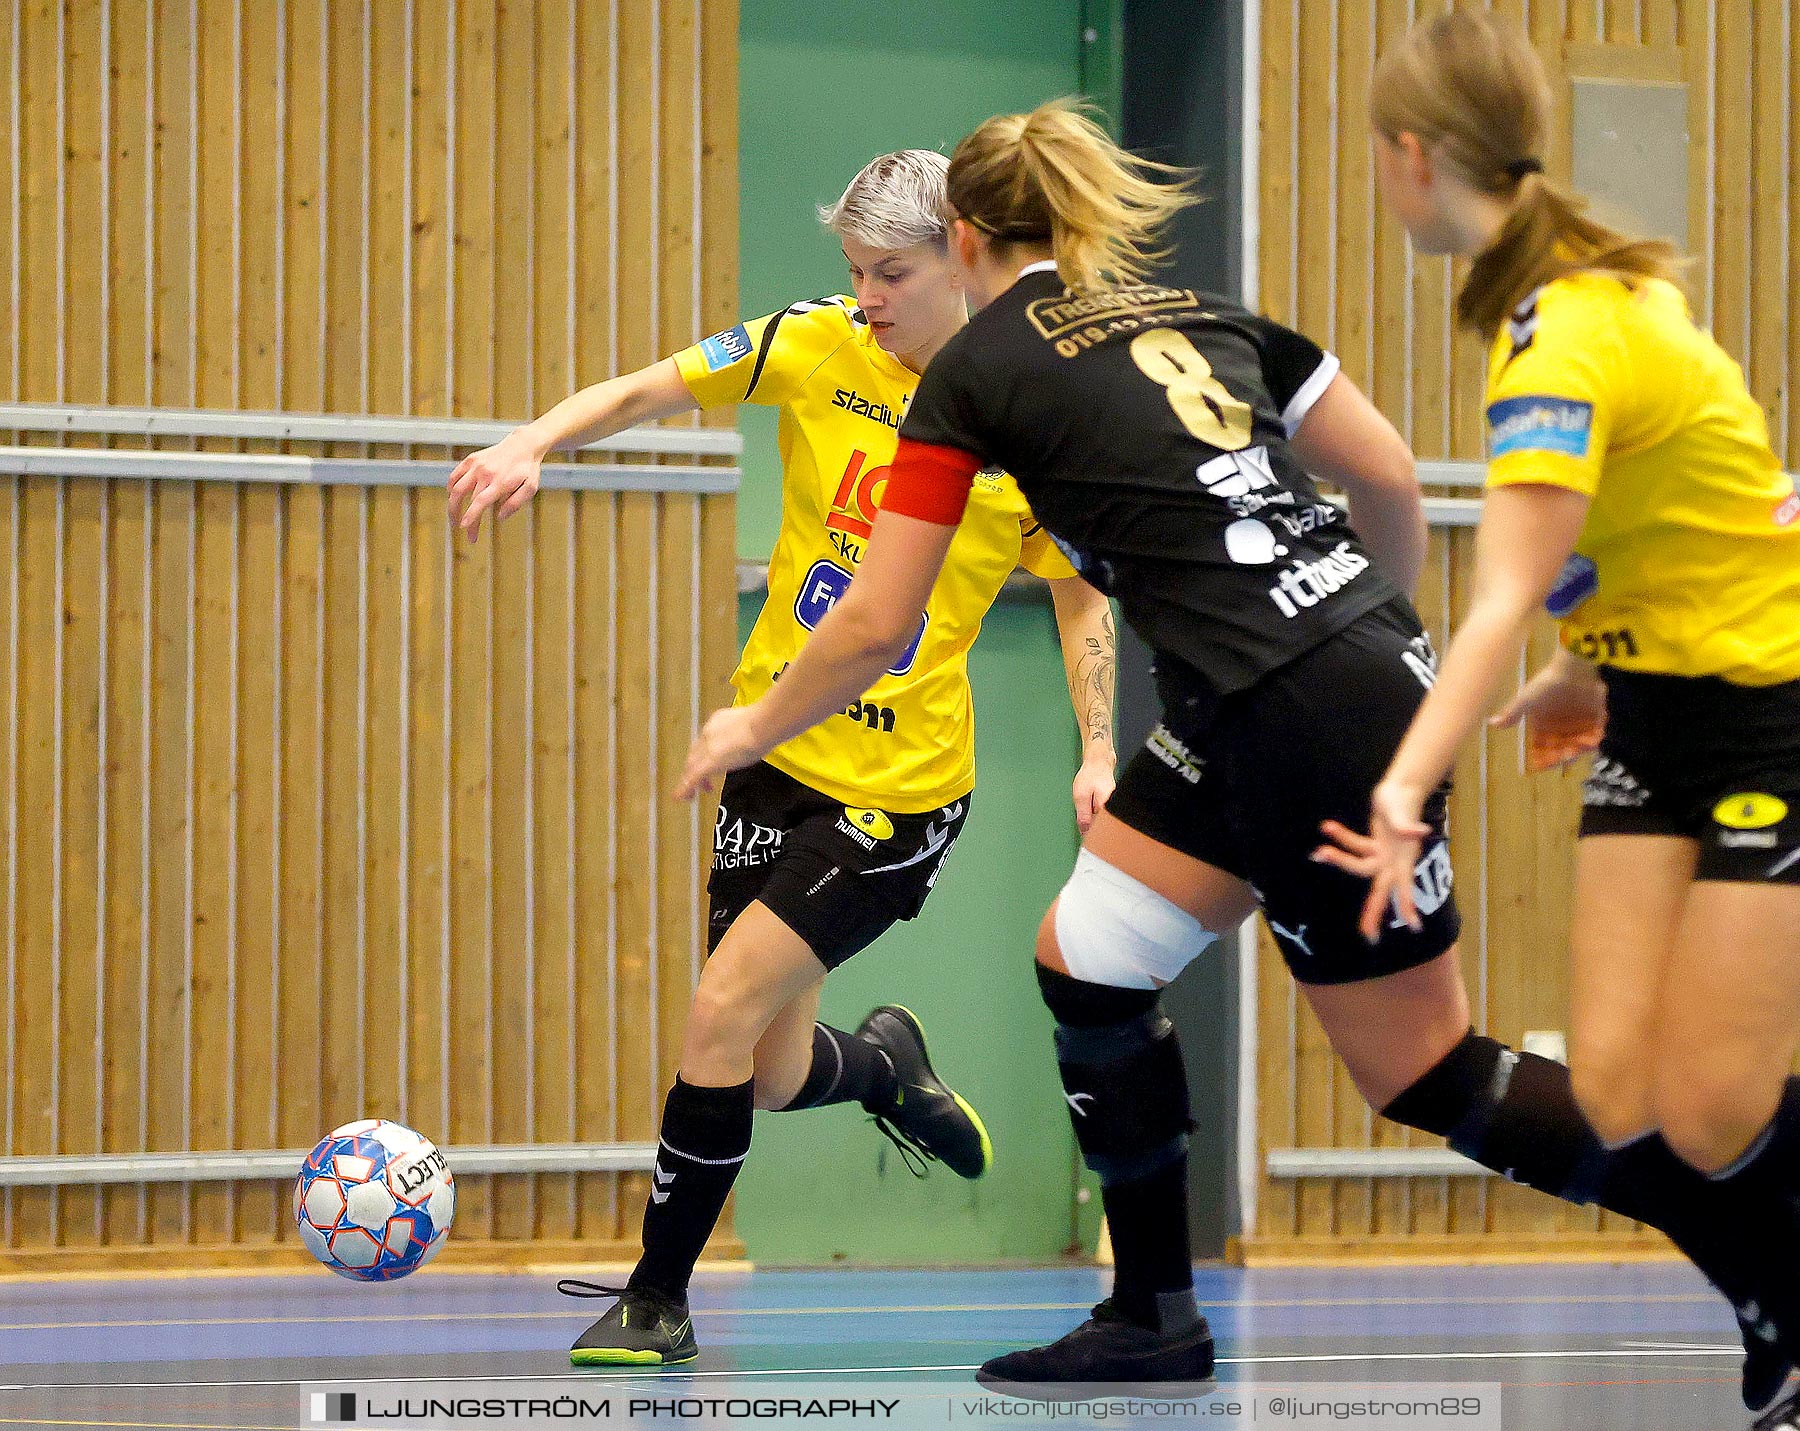 Skövde Futsalcup 2021 Damer Örebro Futsal Club-Skultorps IF 2,dam,Arena Skövde,Skövde,Sverige,Futsal,,2021,270490